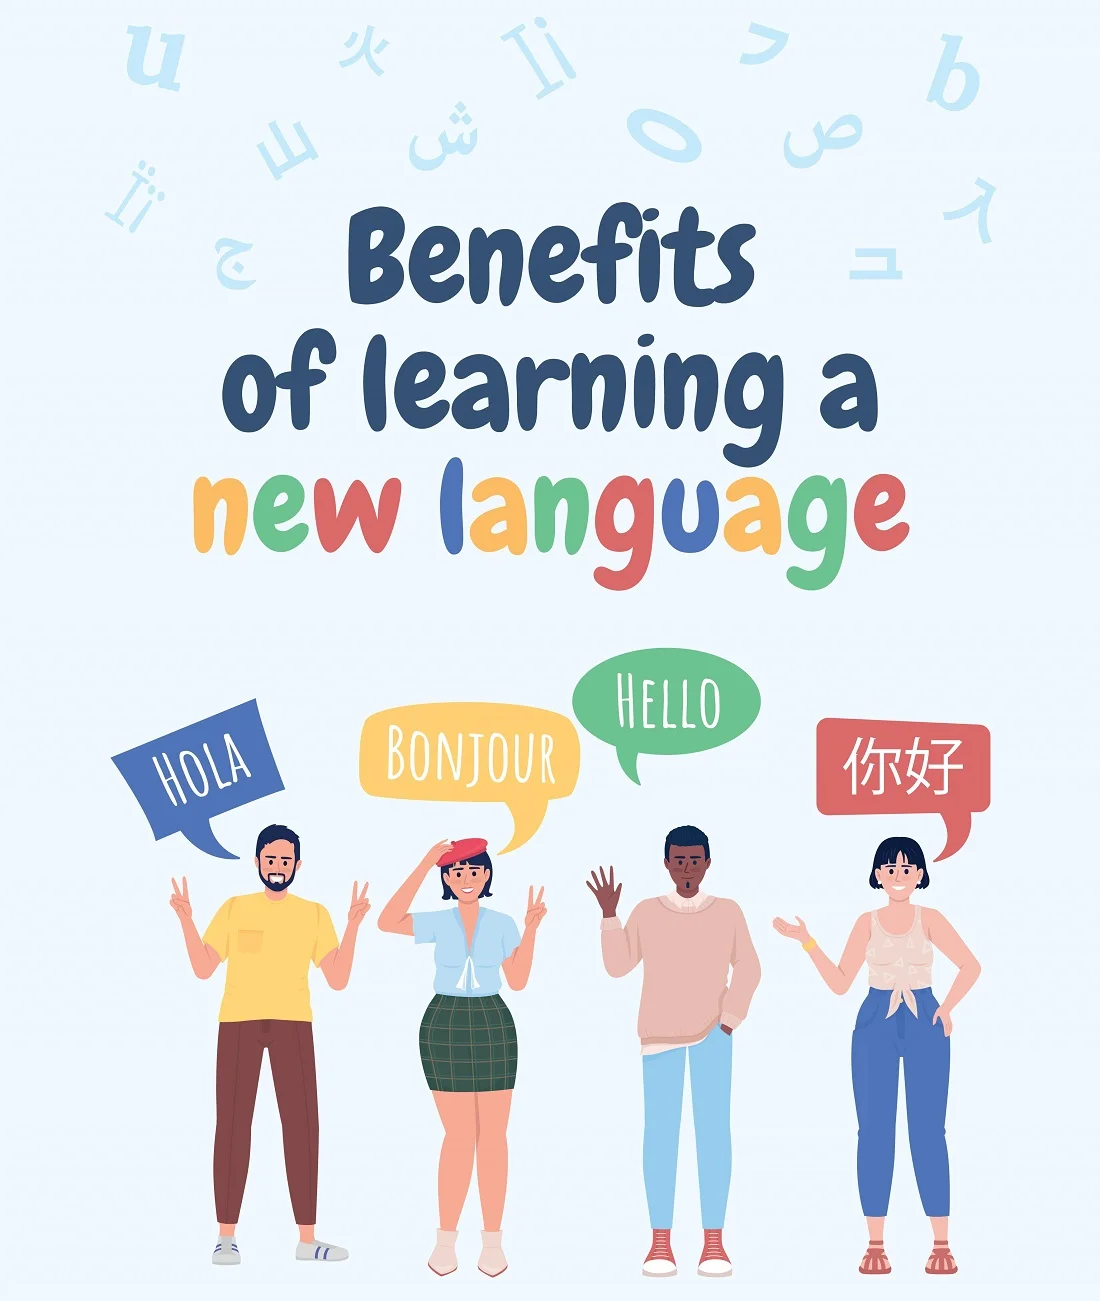 Benefits of learning new language